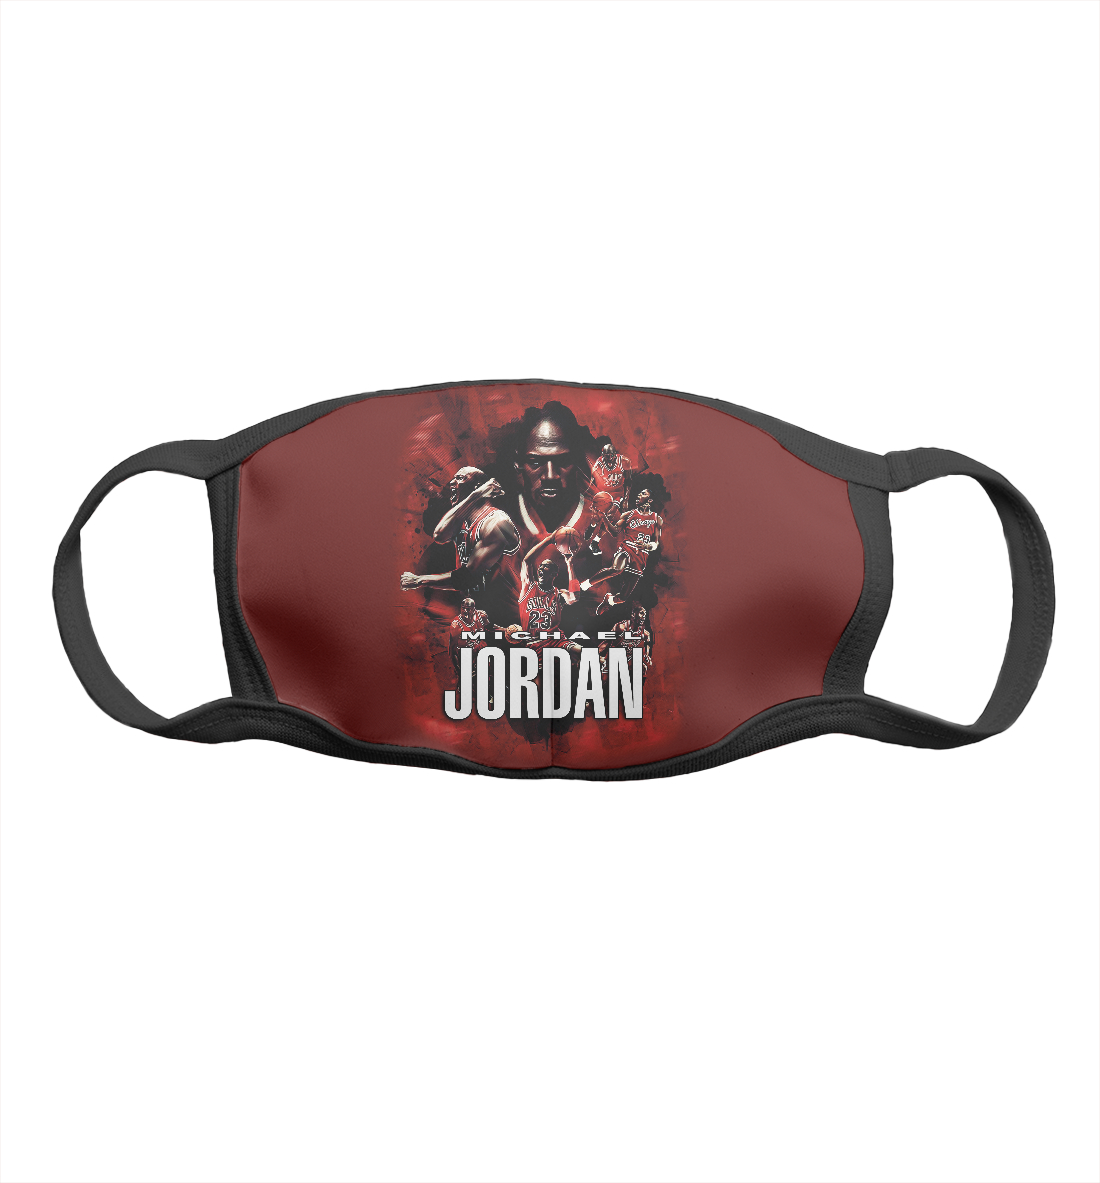 Michael Jordan michael jordan 23